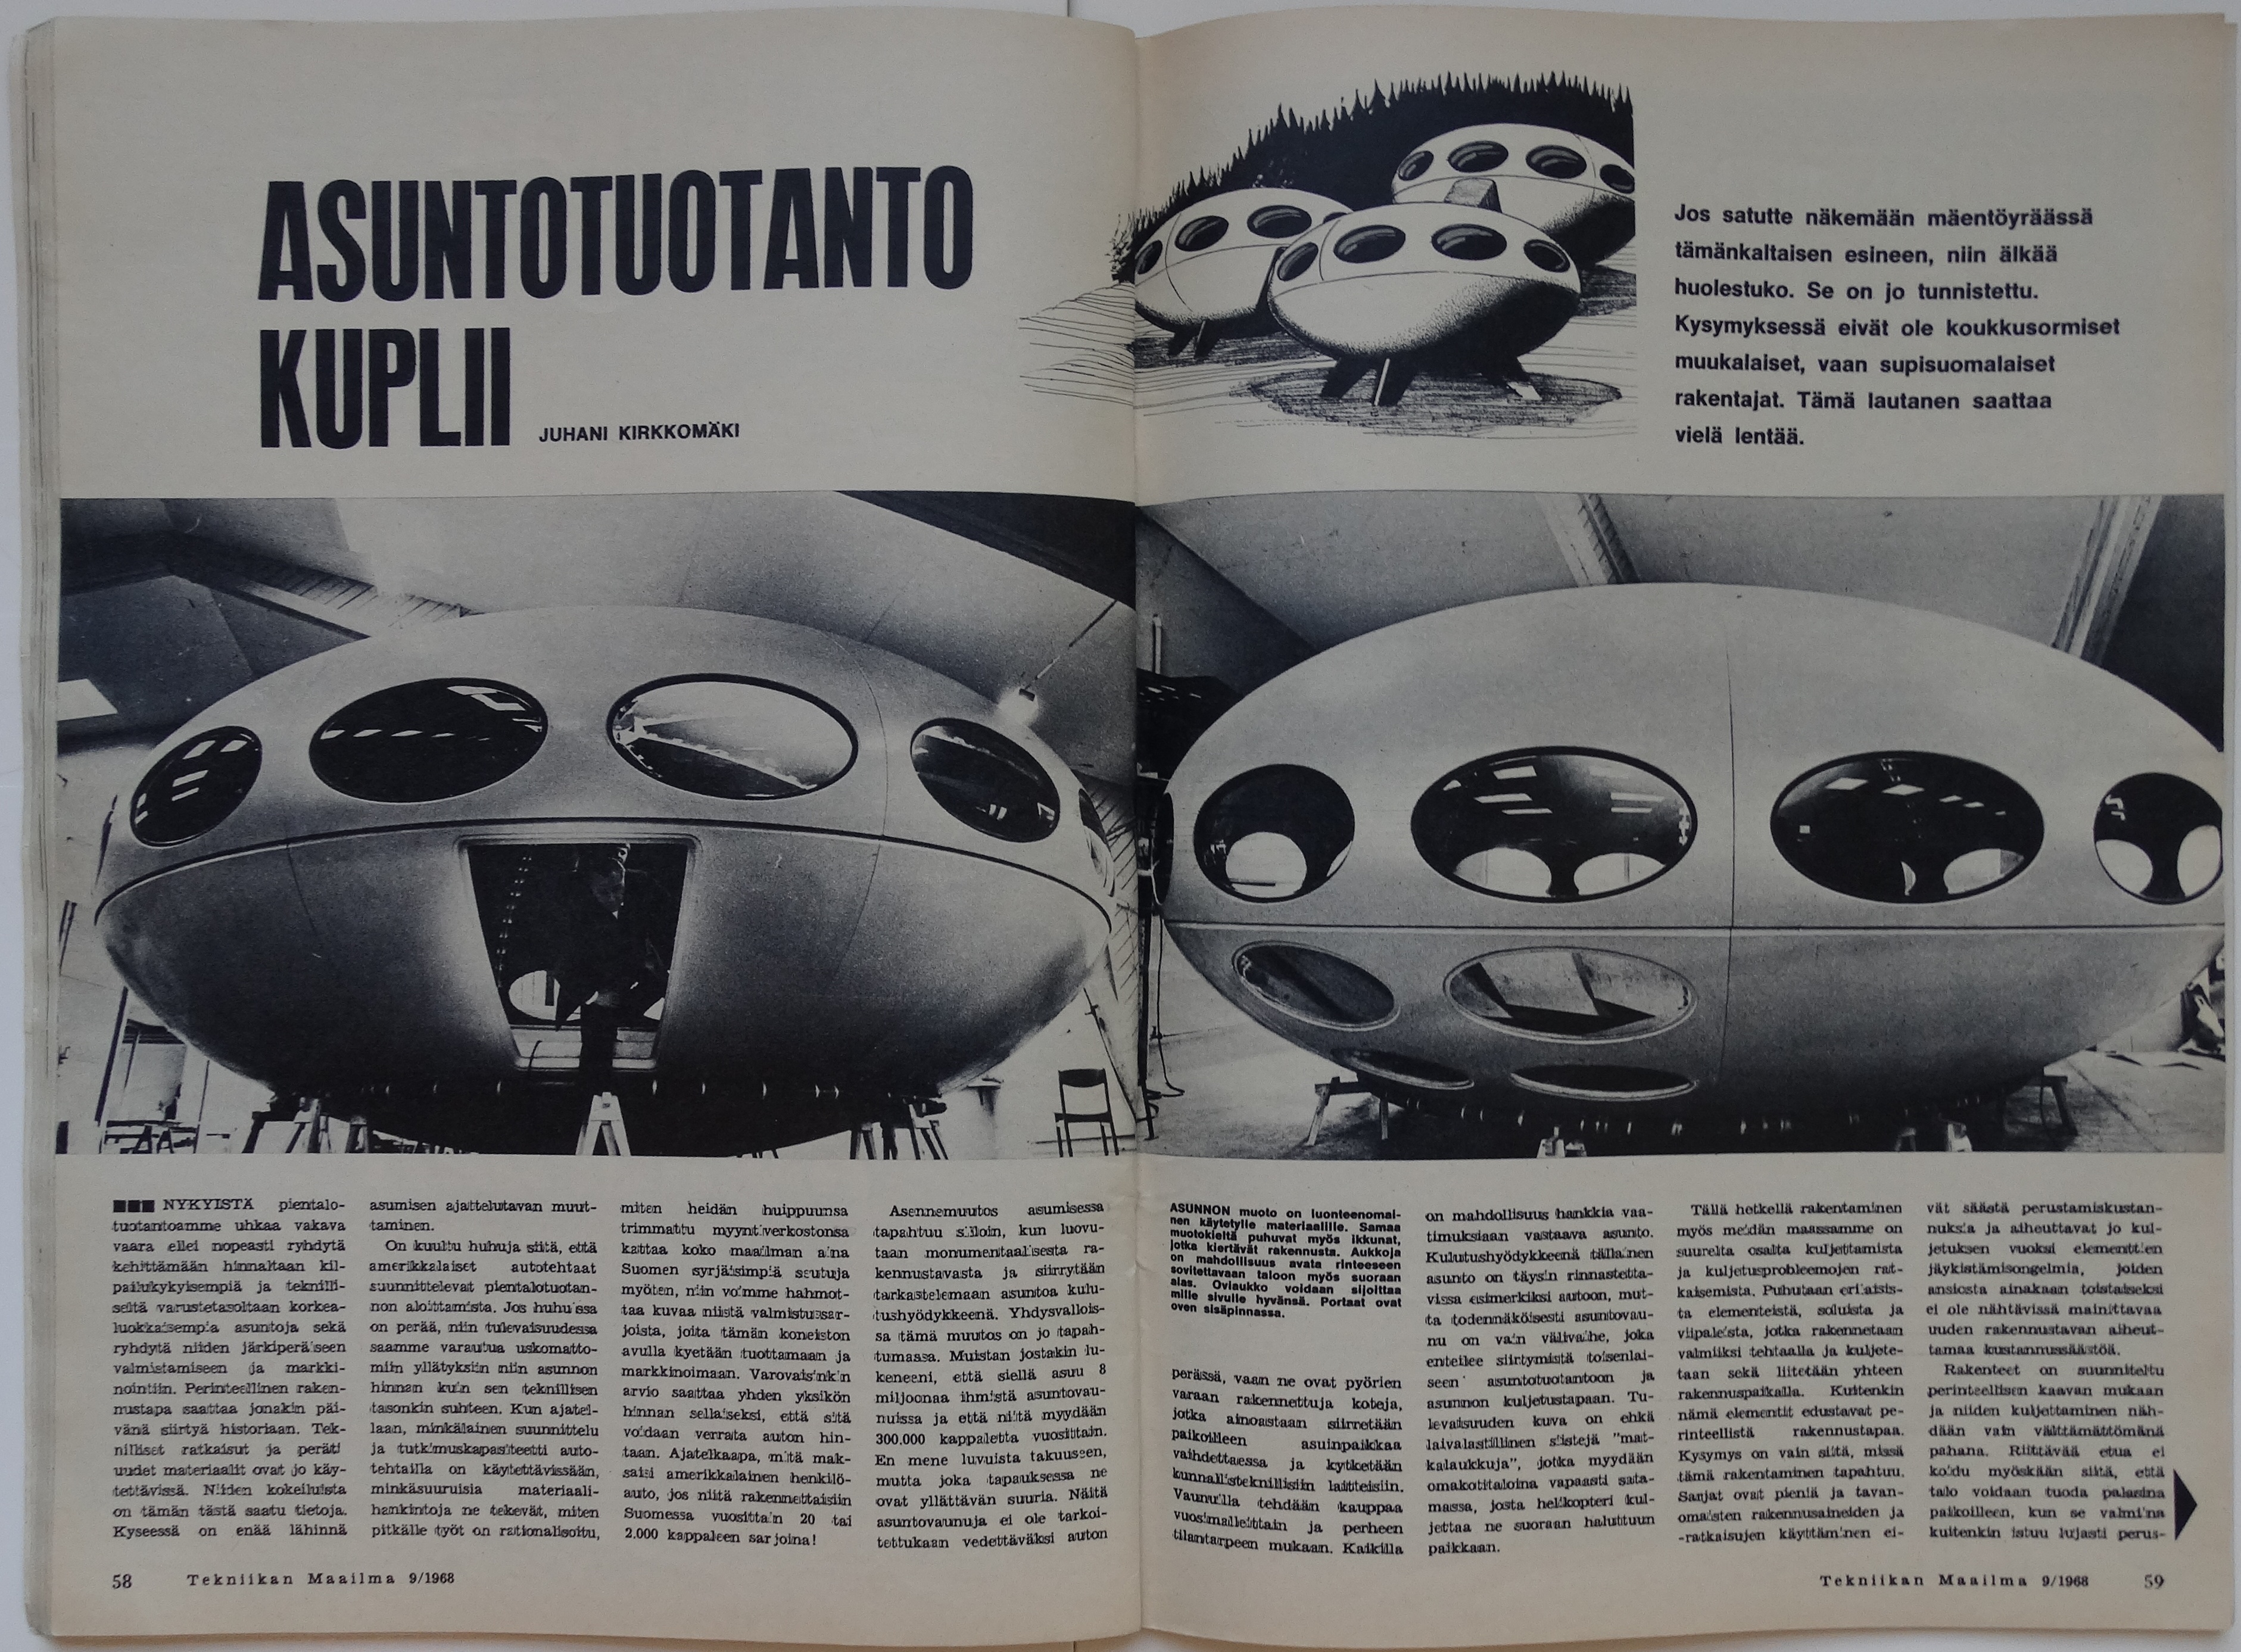 Tekniikan Maailma September 1968 | Pages 58-59